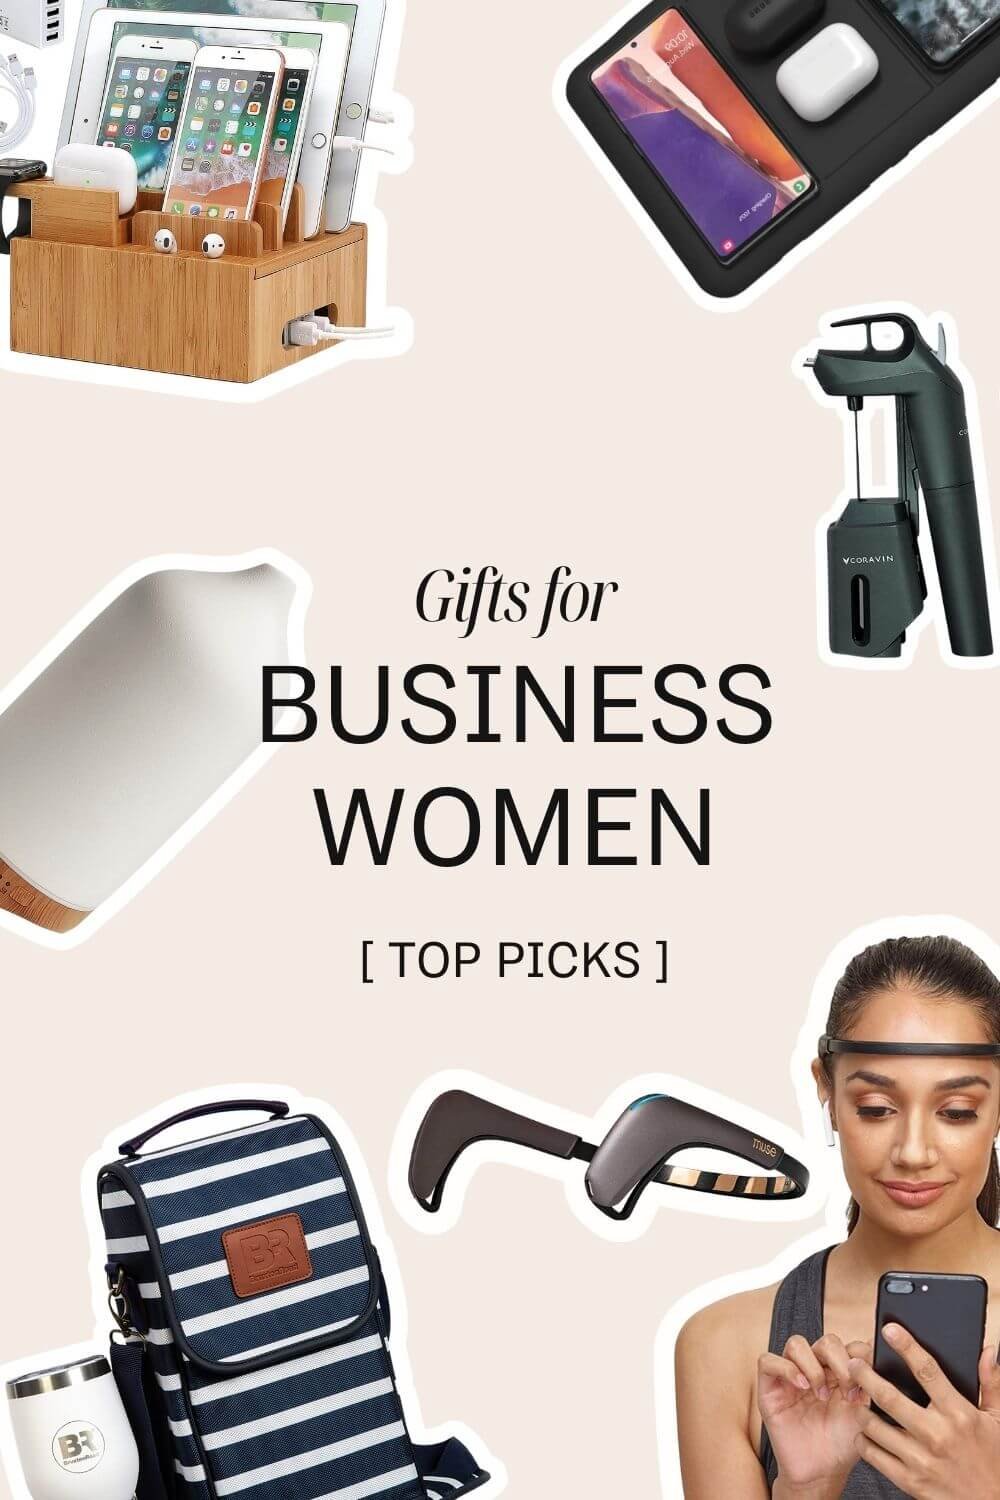 https://images.squarespace-cdn.com/content/v1/612d59e1be002022b69bab38/1658951204129-IH3X0OHMZETRZY8X8EW4/gifts-for-business-women-female-business-partner-self-employed-women-1.jpg